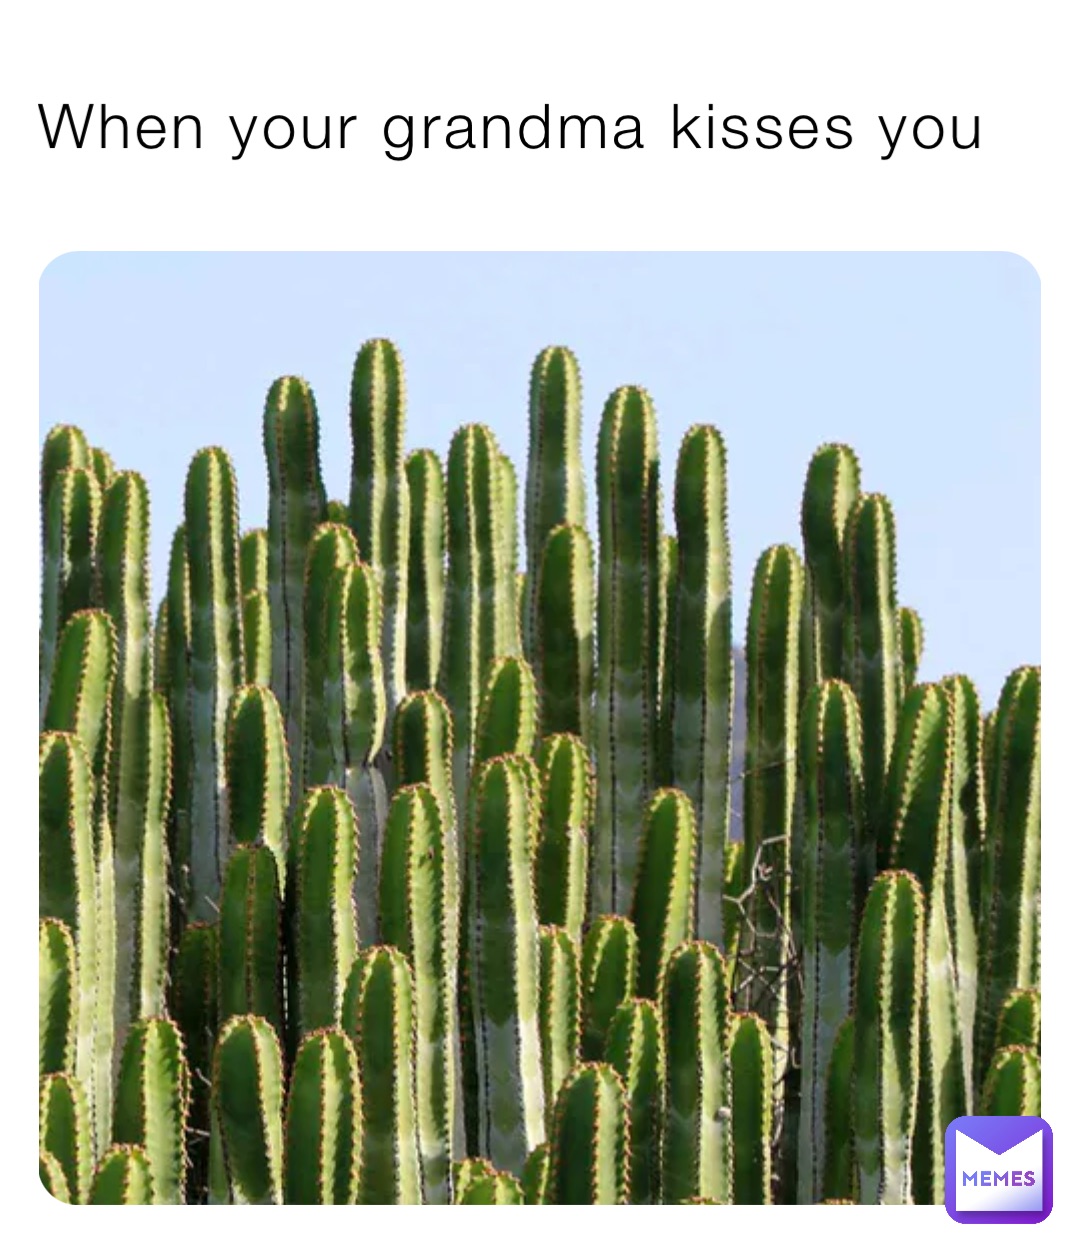 When your grandma kisses you